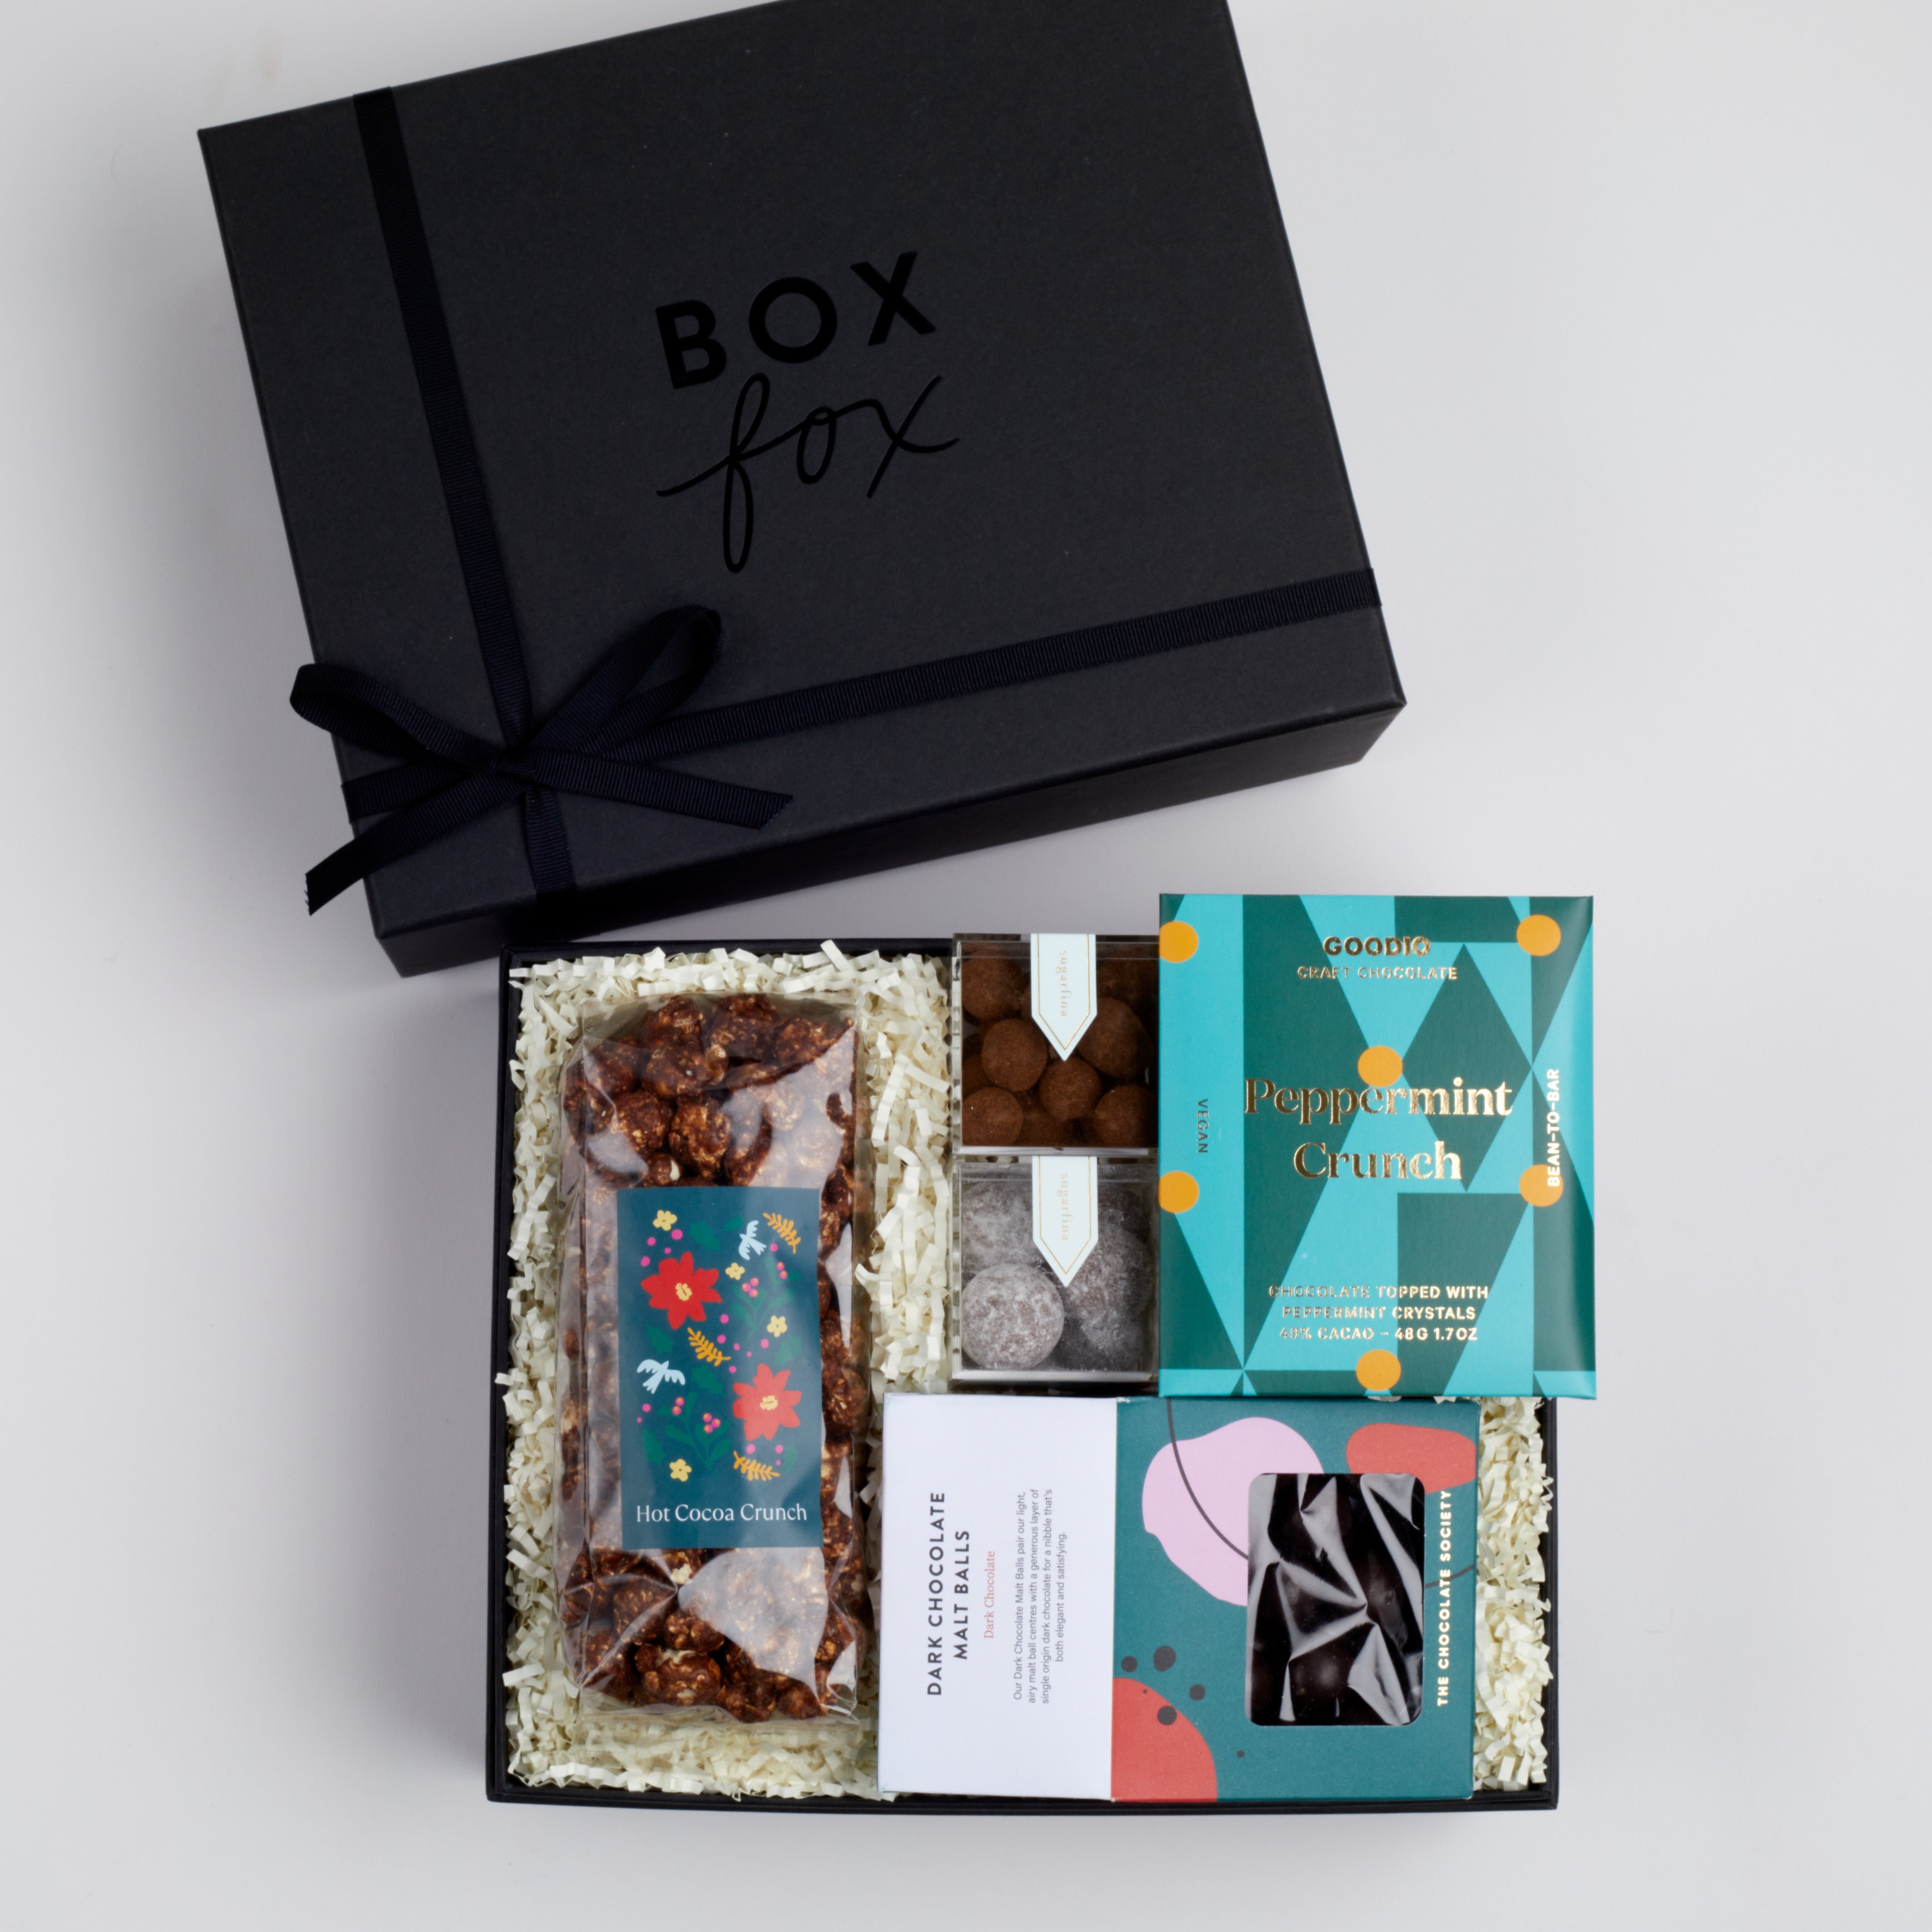 BOXFOX black gift box packed with hot cocoa crunch popcorn, dark chocolate malt balls, sugarfina candies and goodio peppermint crunch chocolate